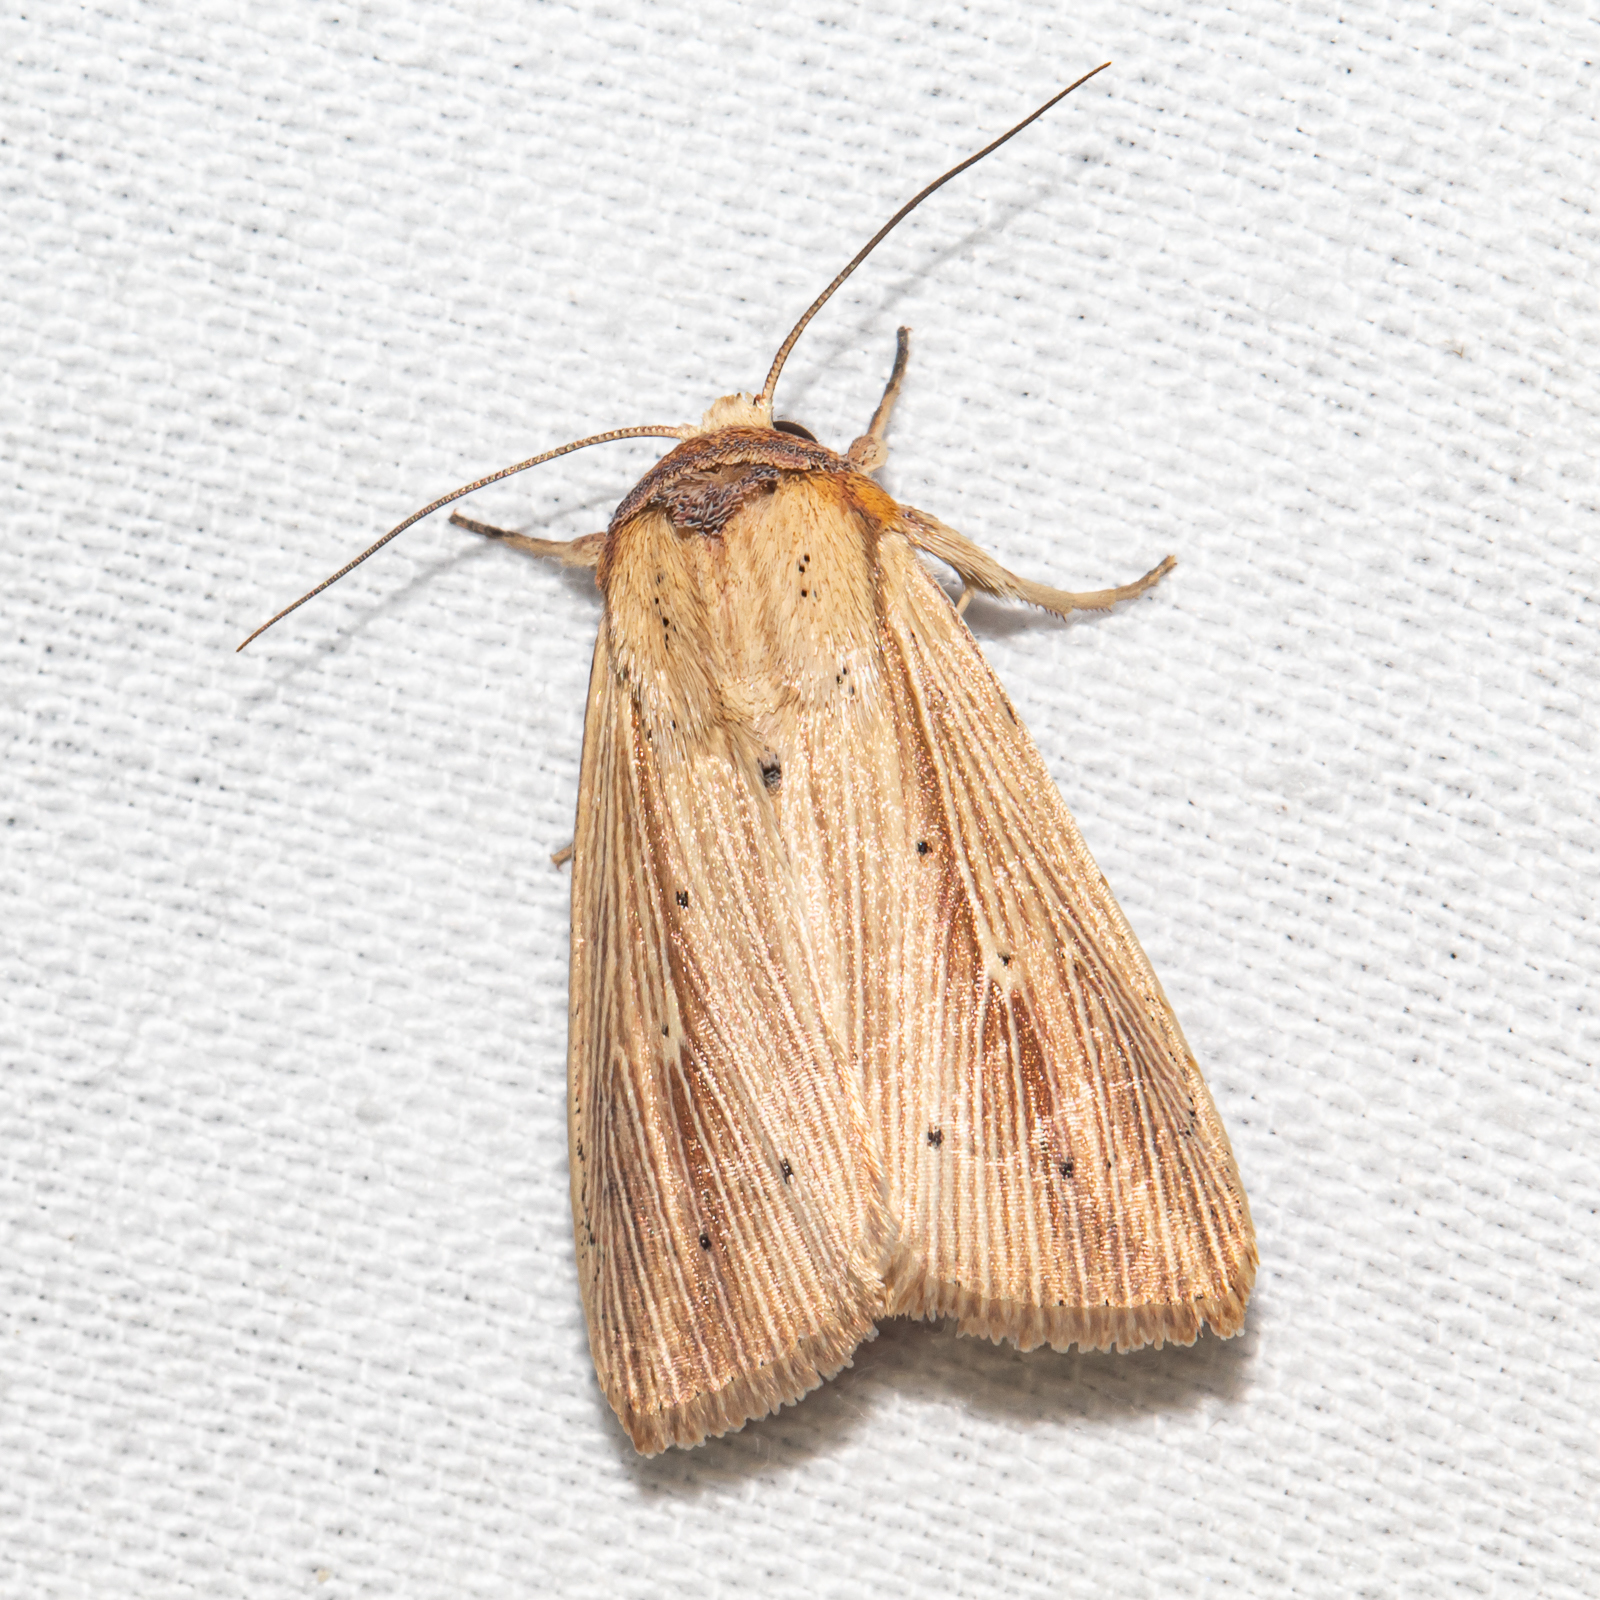 Maryland Biodiversity Project - Adjutant Wainscot Moth (Leucania adjuta)